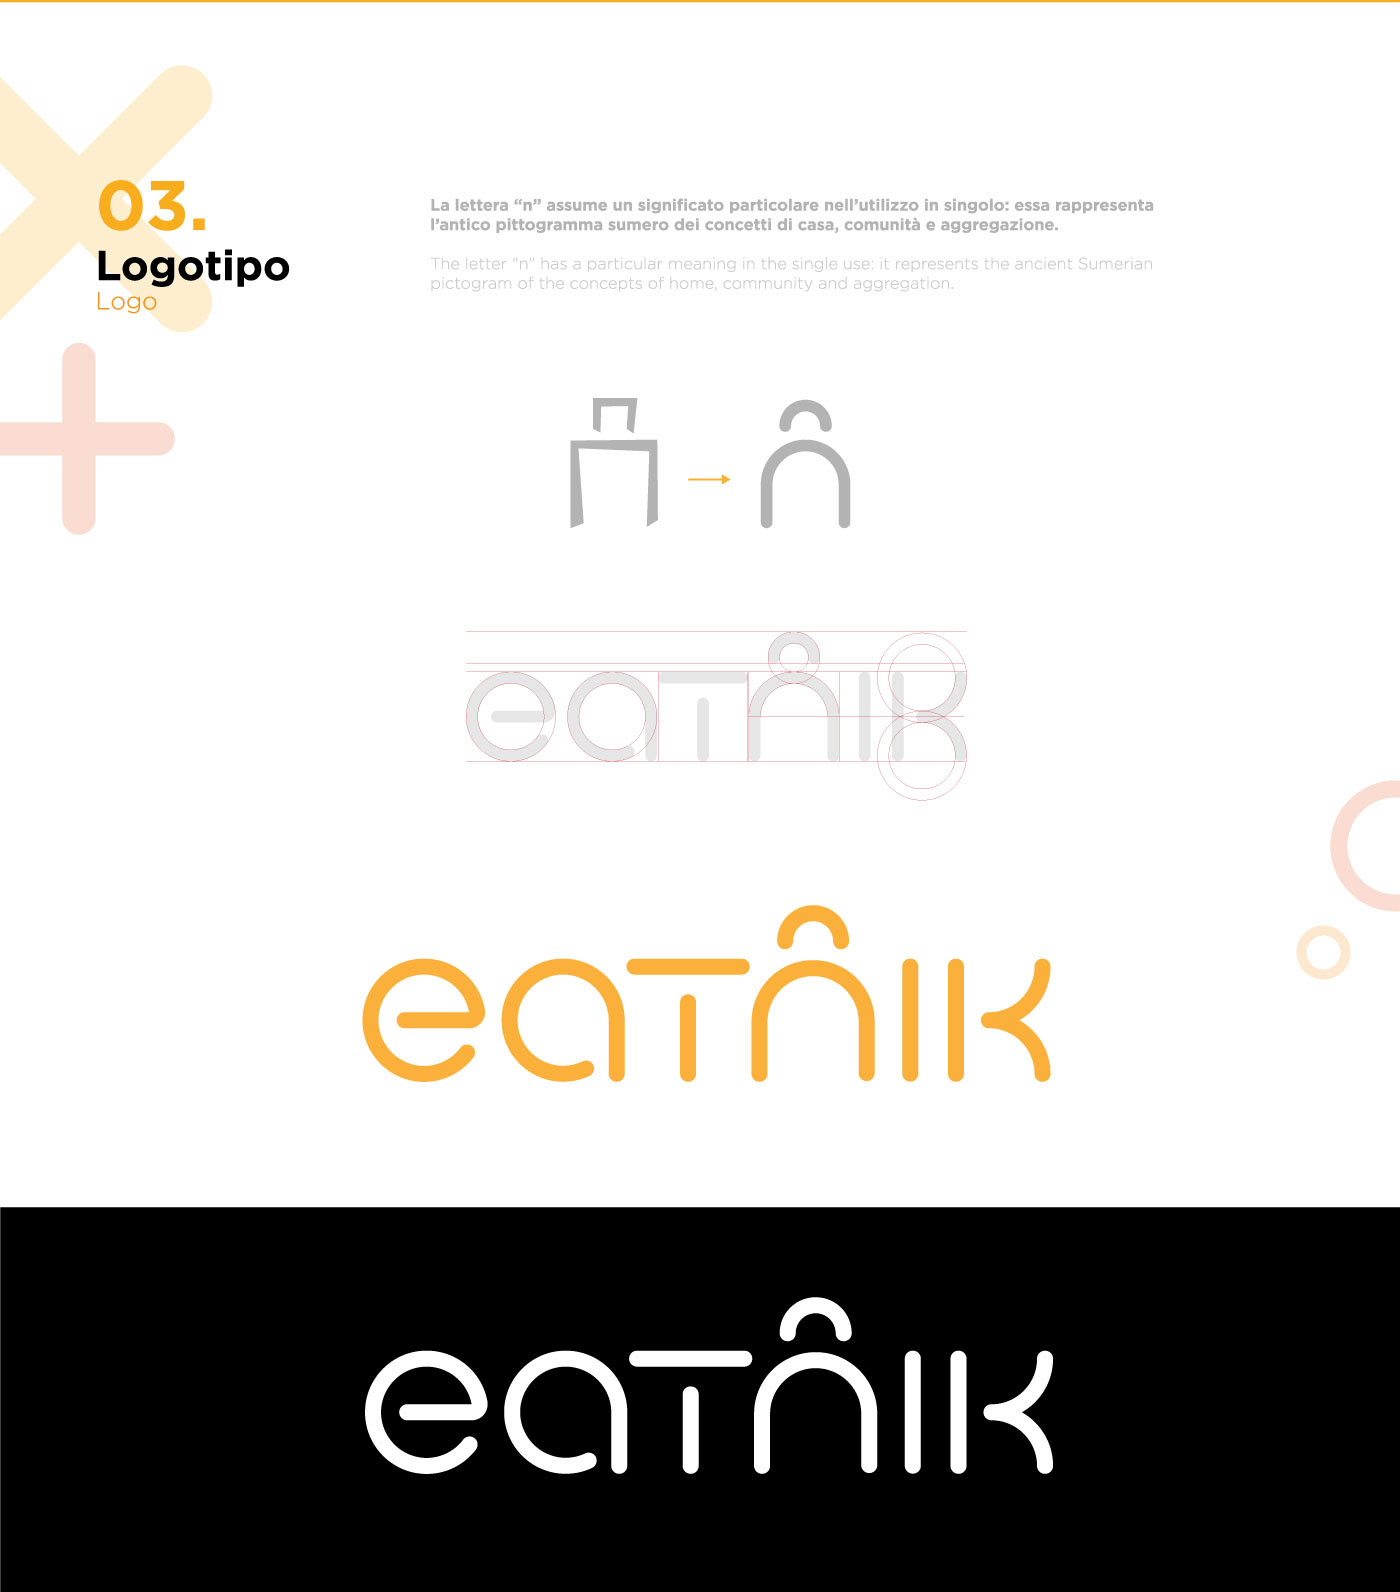 UI/UX Design user experience social eating food app app visual graphic logo user interface design